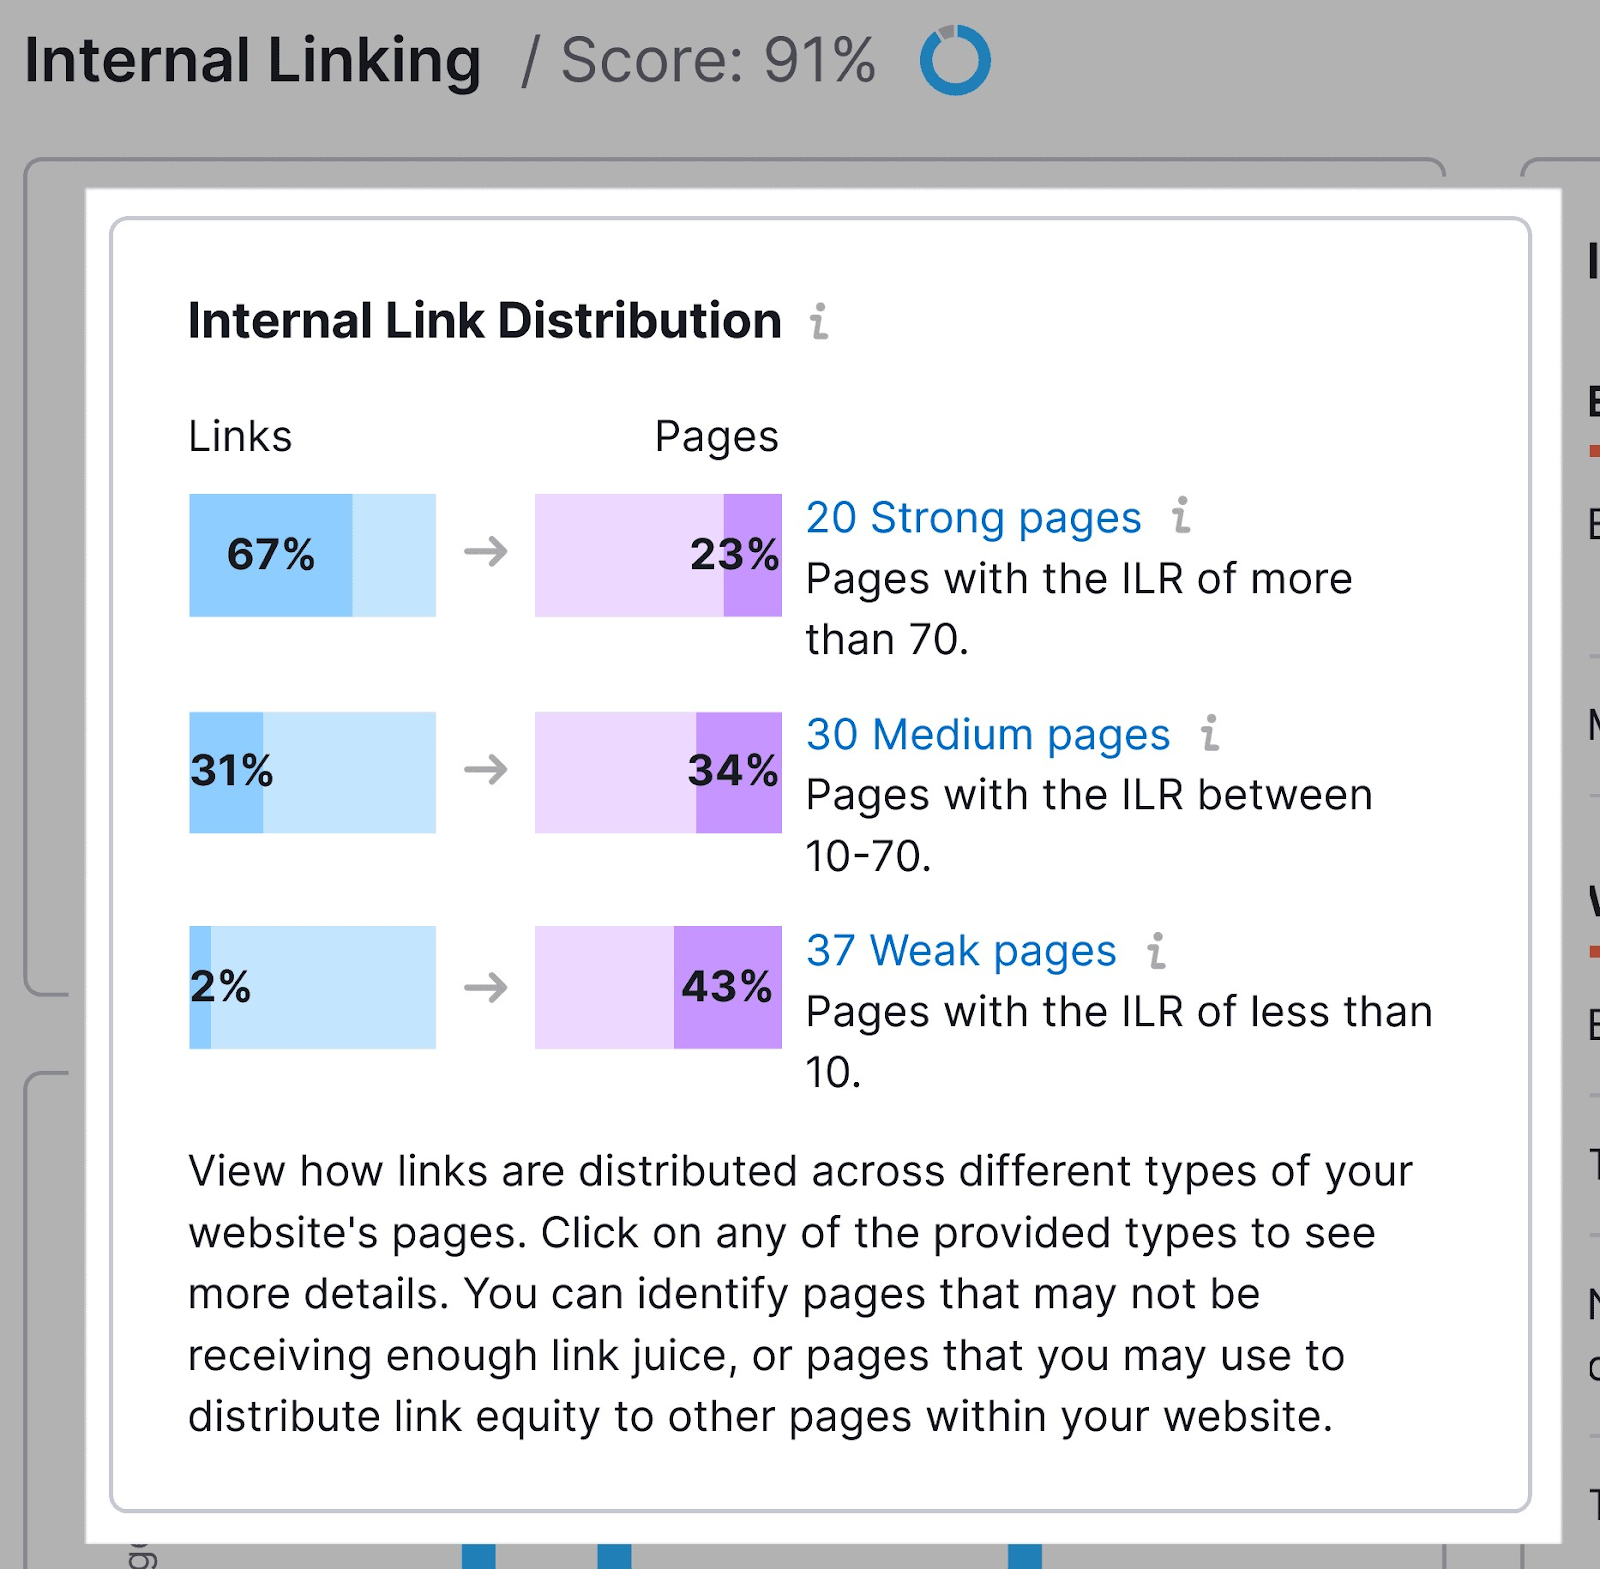 Internal Link Distribution section